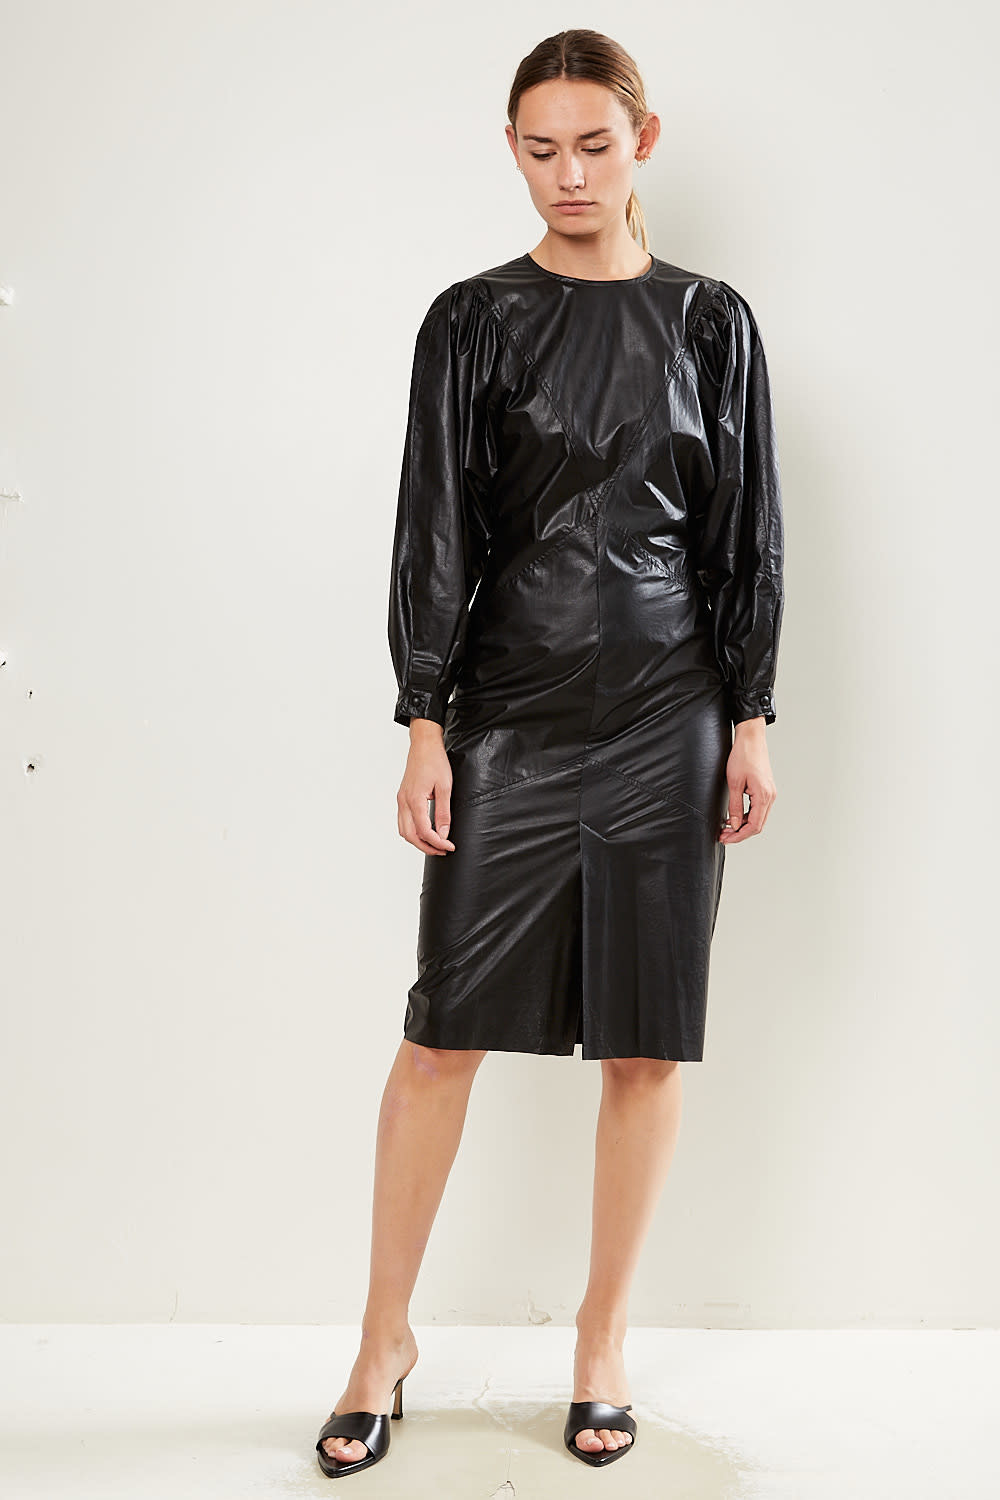 Isabel Marant Drea faux leather dress - Wendela van Dijk